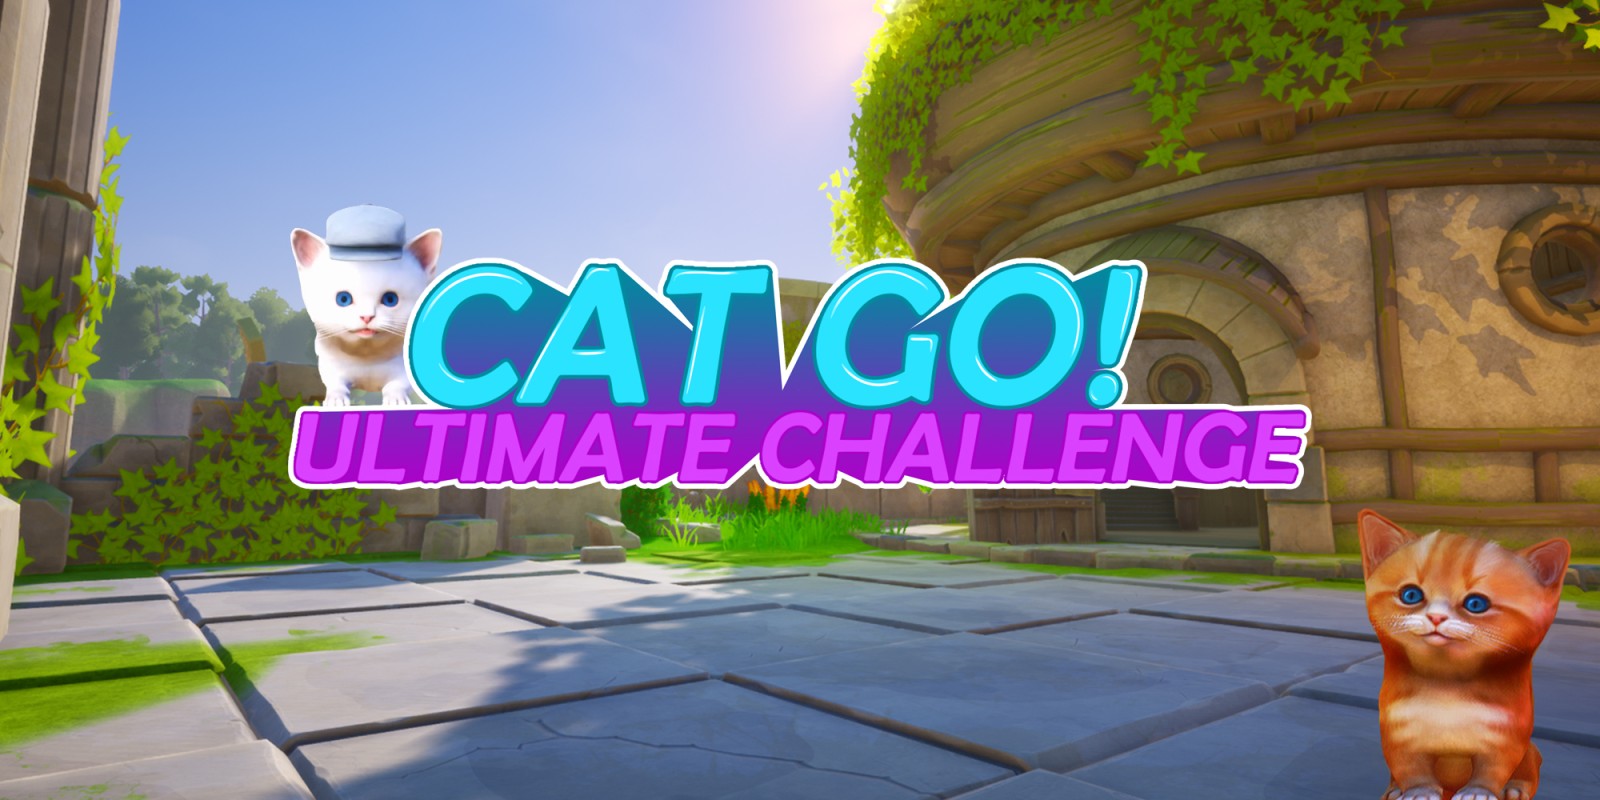 Cat Go! Ultimate Challenge